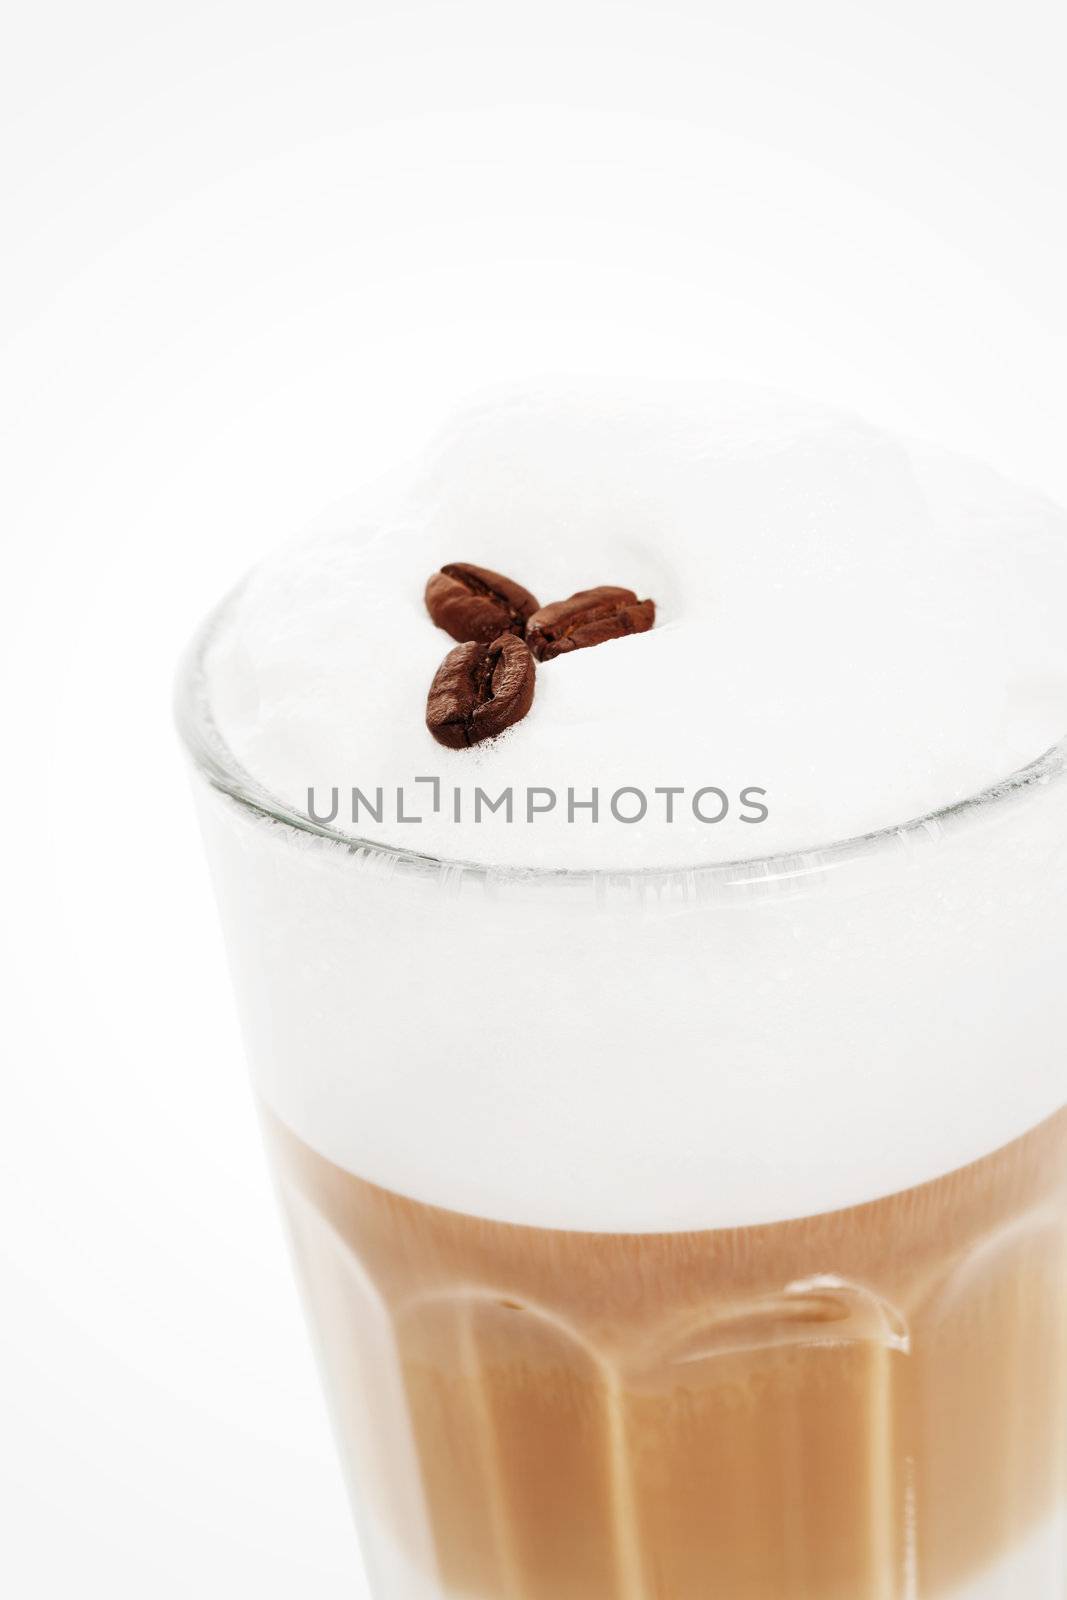 closeup of coffee beans on a latte macchiato foam